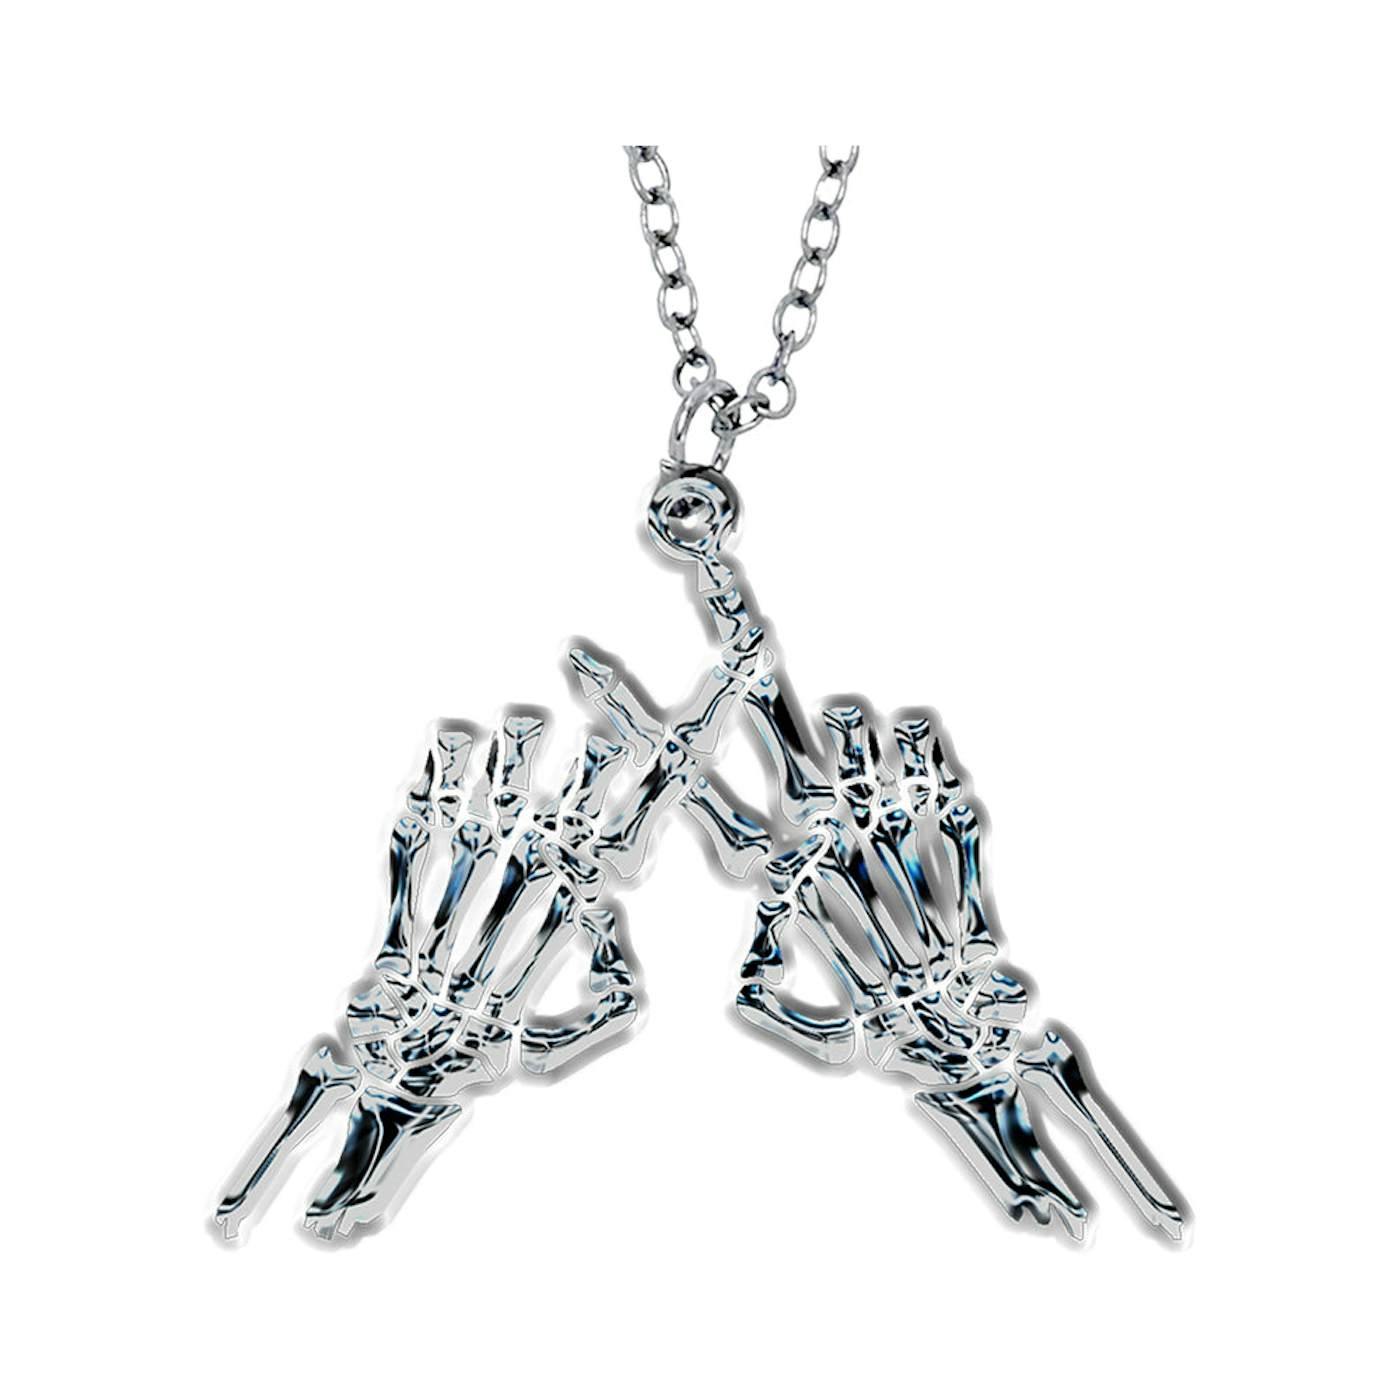 Skeleton Hands Necklace - Twenty One Pilots